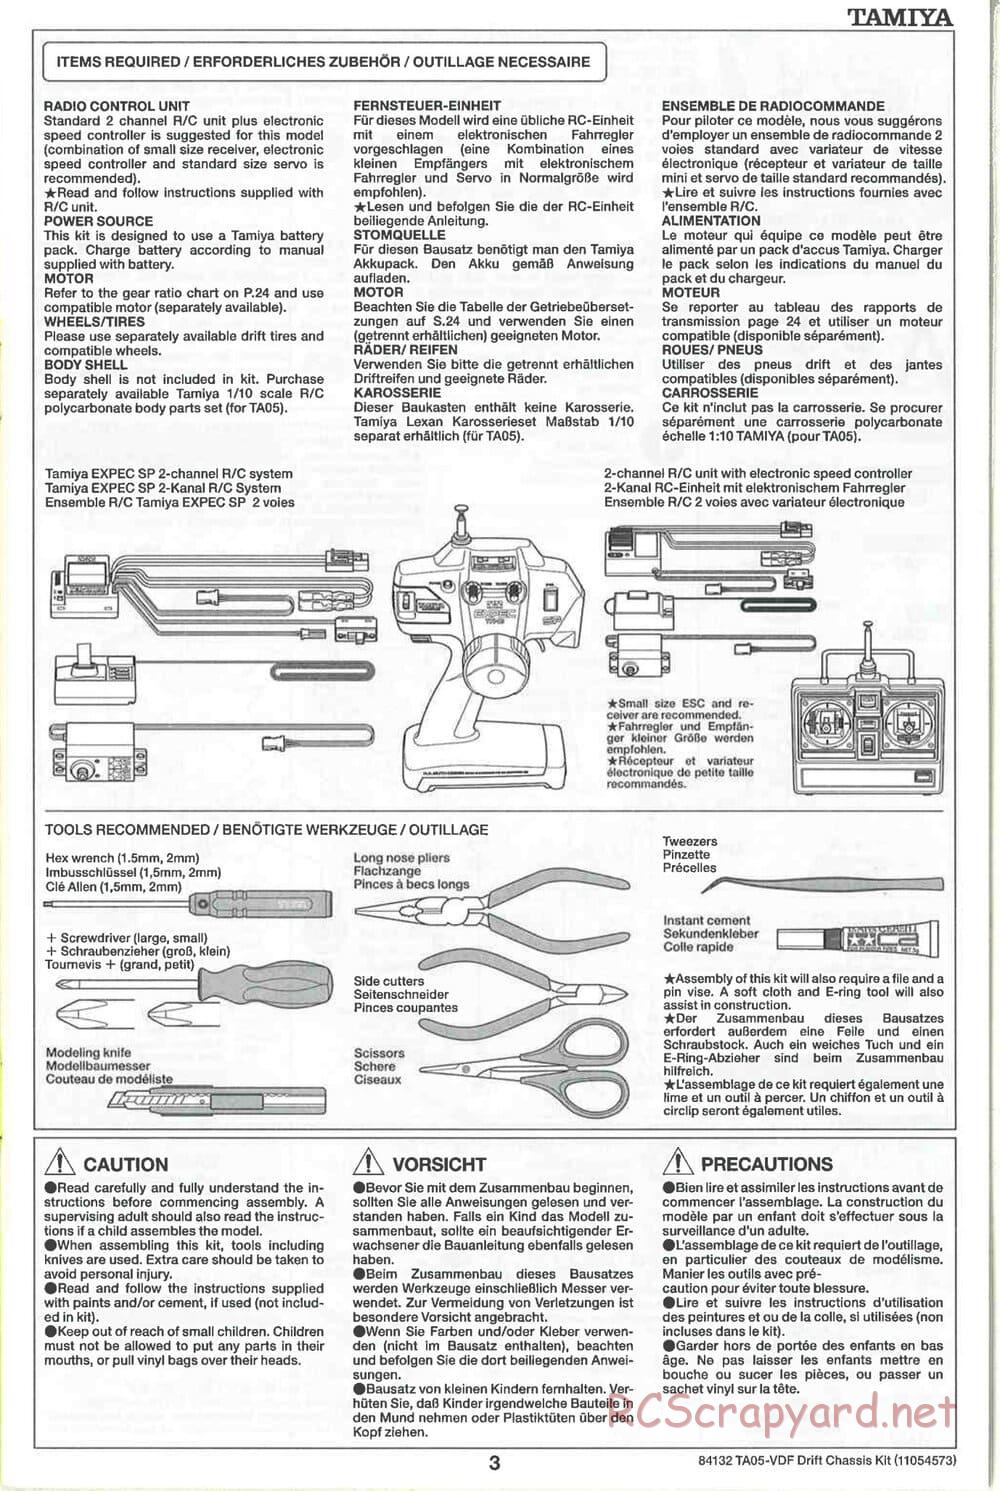 Tamiya - TA05-VDF Drift Spec Chassis - Manual - Page 3